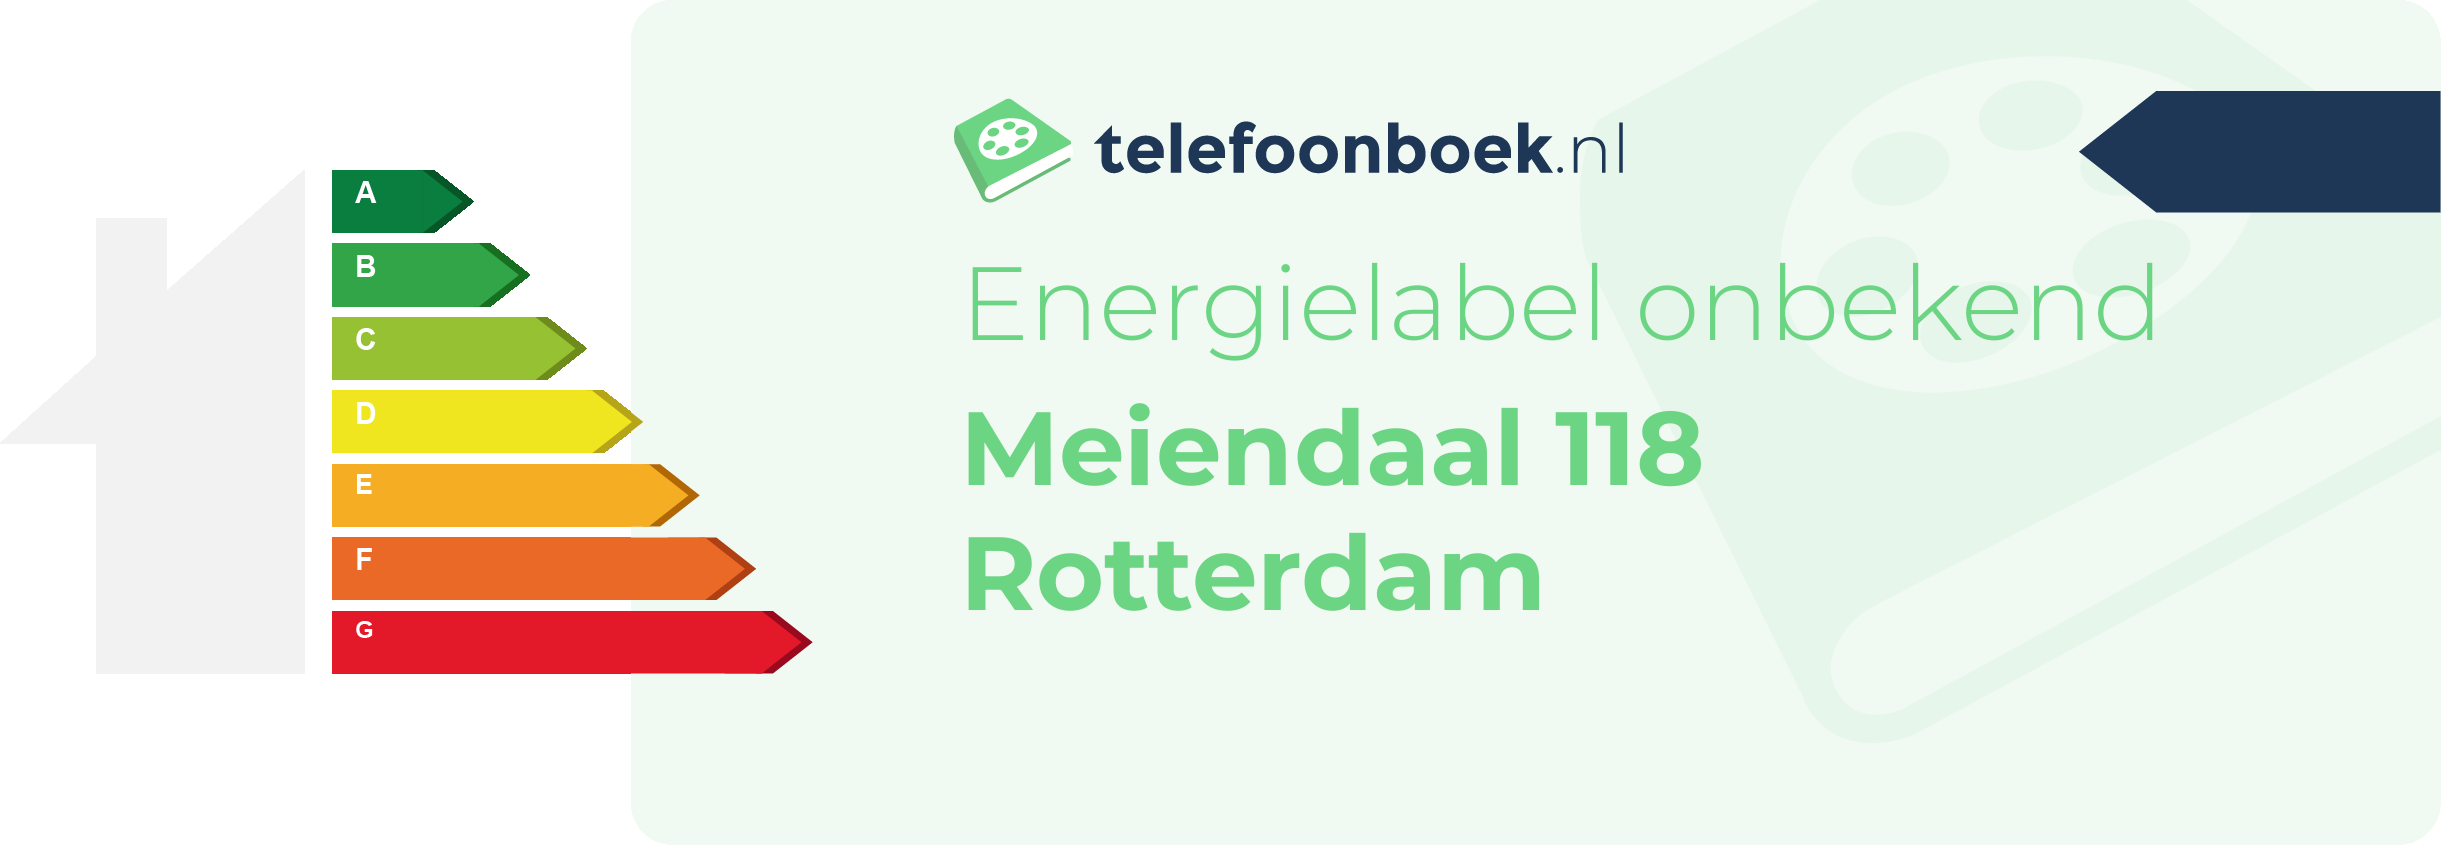 Energielabel Meiendaal 118 Rotterdam